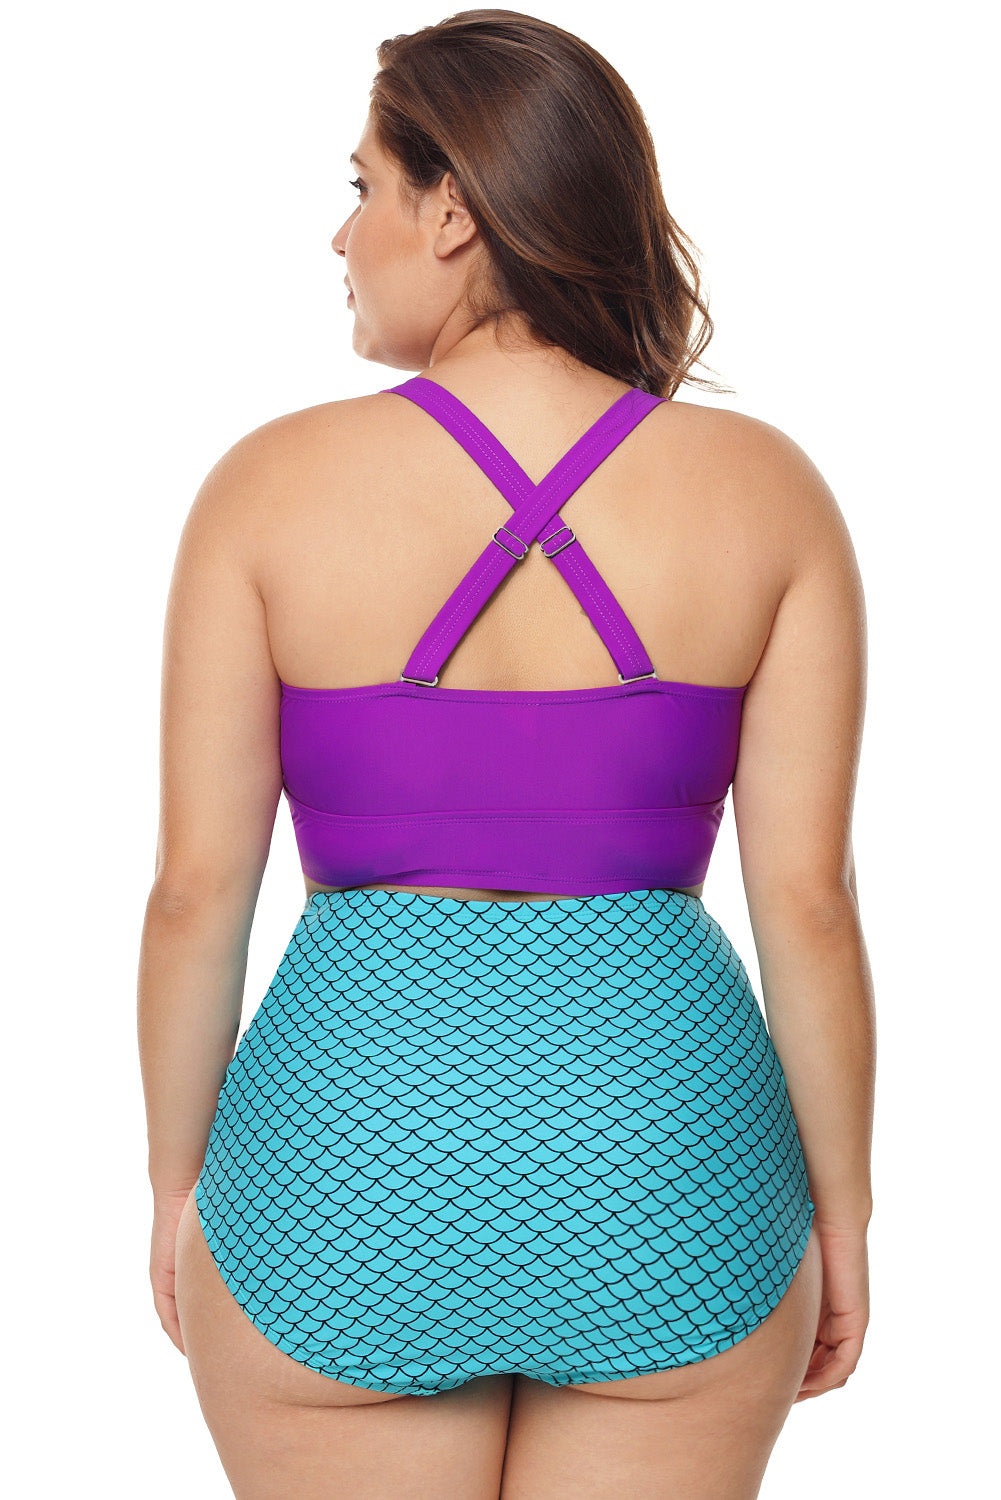 Purple & Blue Scalloped Detail High Waist Swimsuit